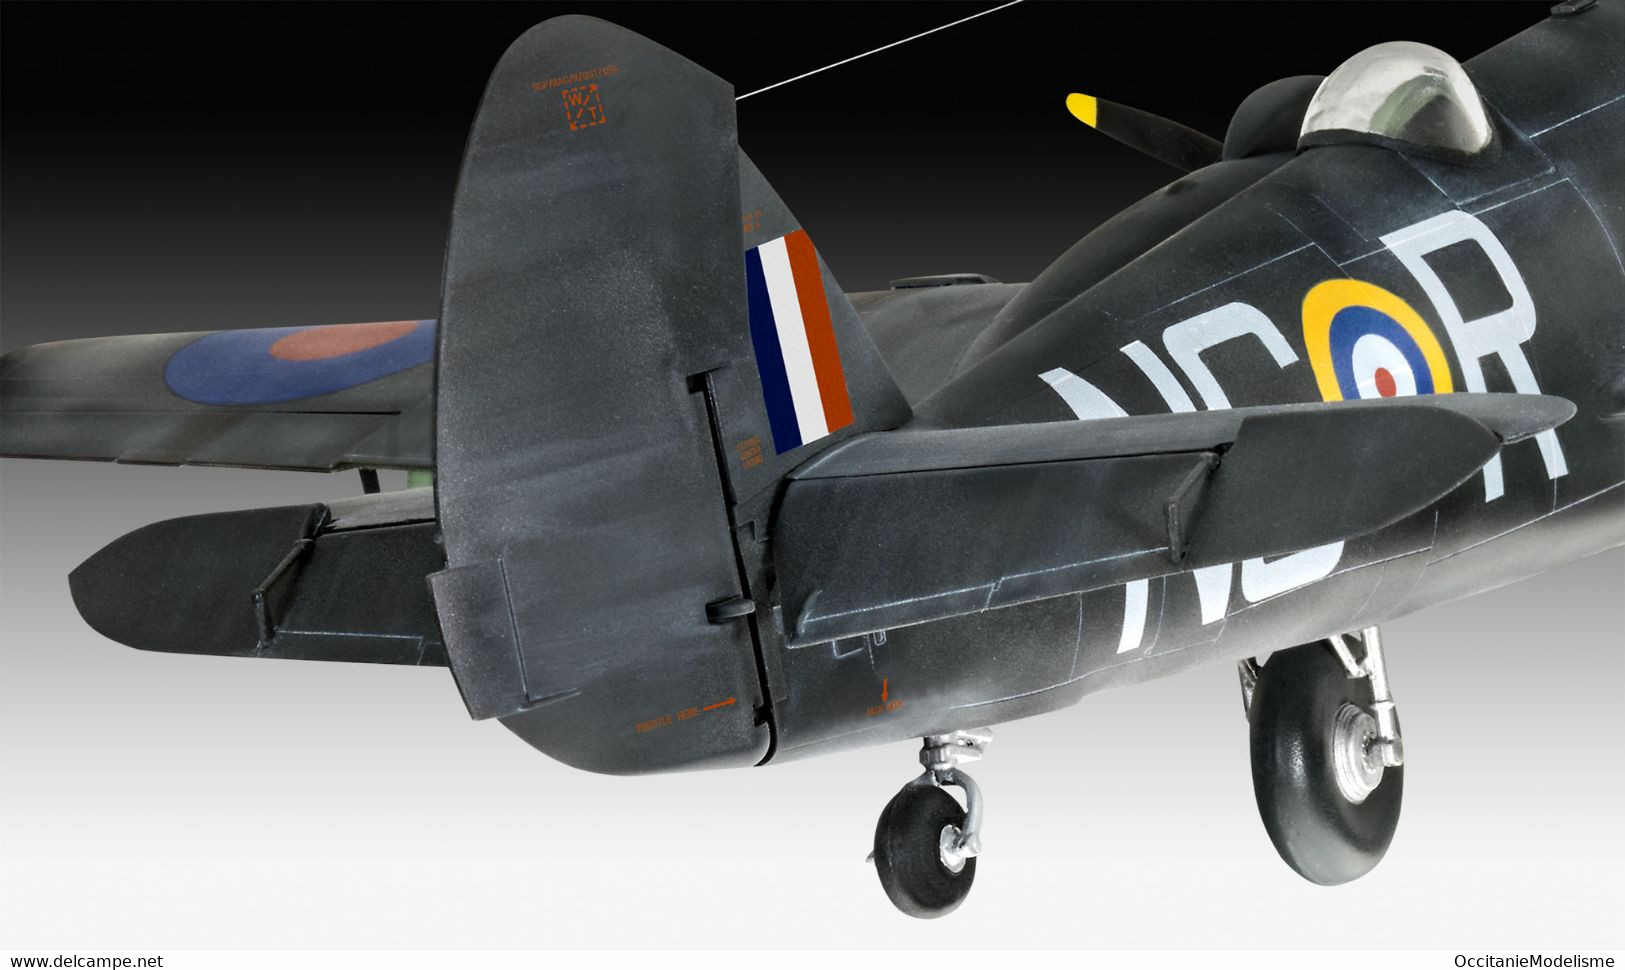 Revell - BRISTOL BEAUFIGHTER IF NIGHTFIGHTER RAF Maquette Avion Kit Plastique Réf. 03854 Neuf NBO 1/48 - Vliegtuigen